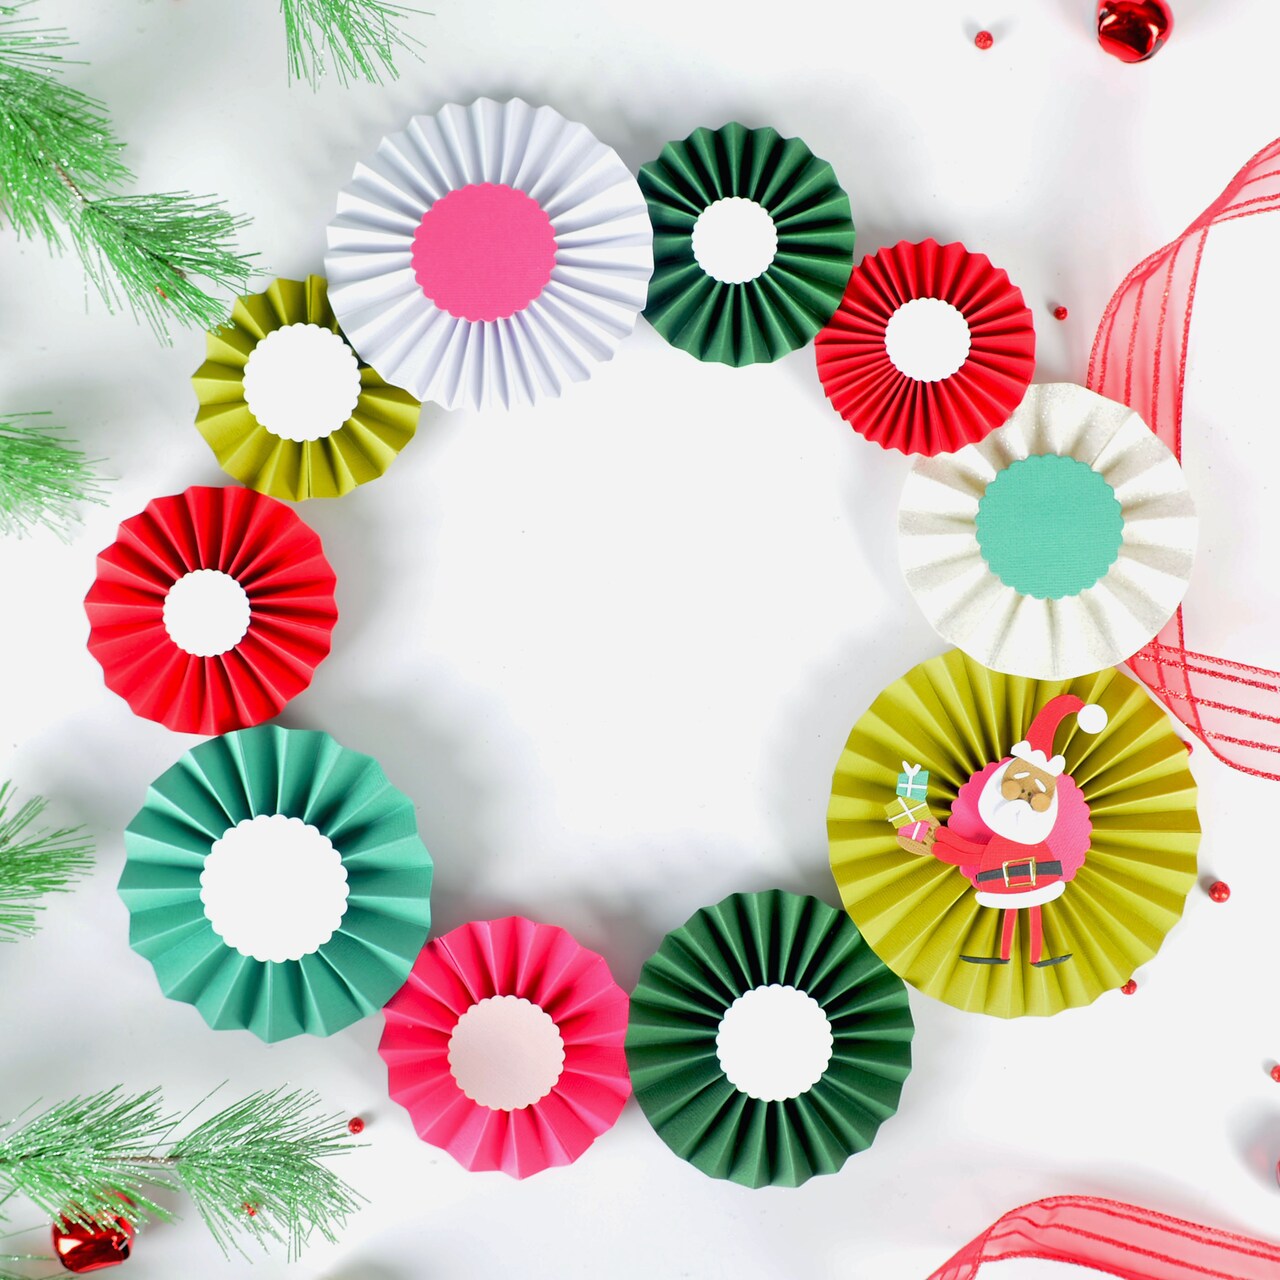 Deck the halls with A Festive Sizzix DIY Christmas Wreath